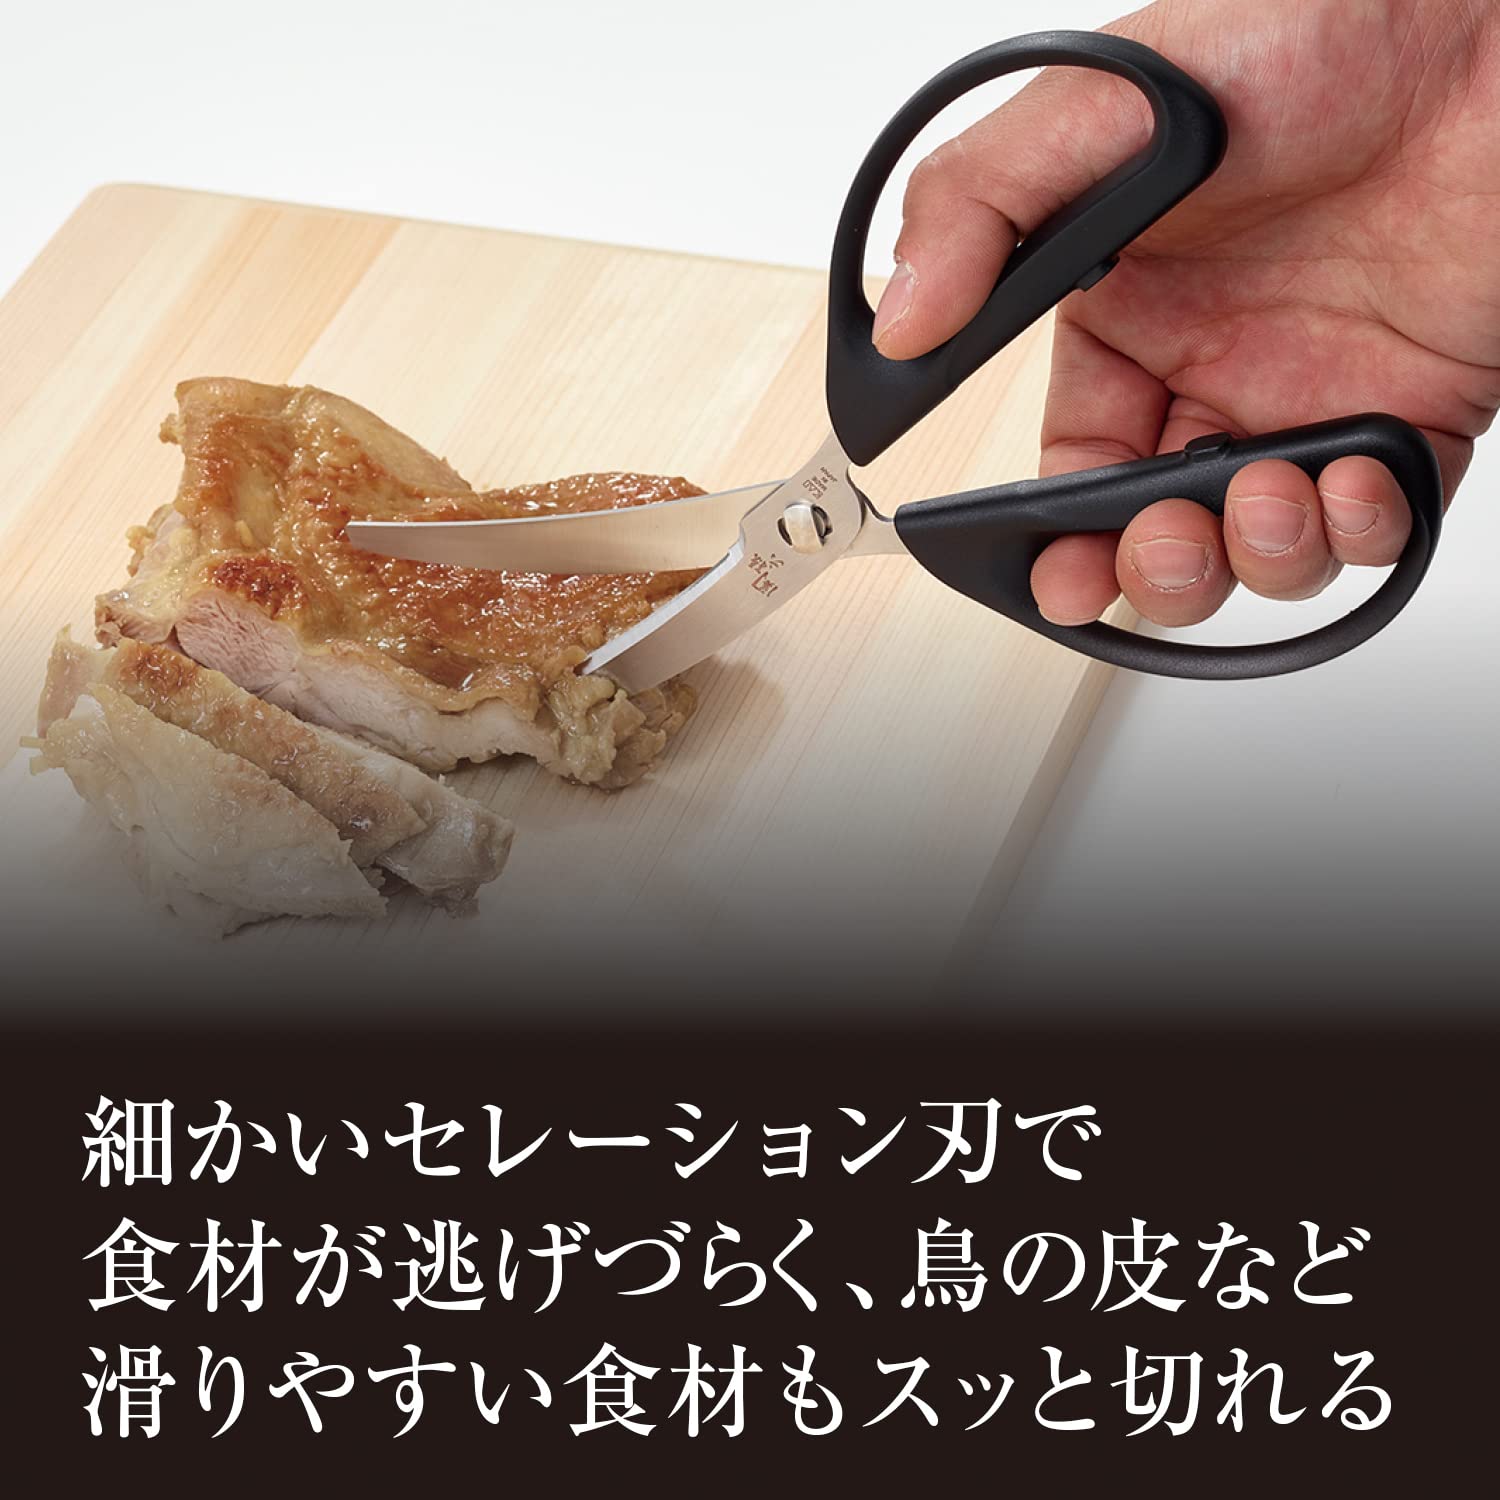 Kai Corp Seki Magoroku Disassembled Kitchen Scissors DH3354